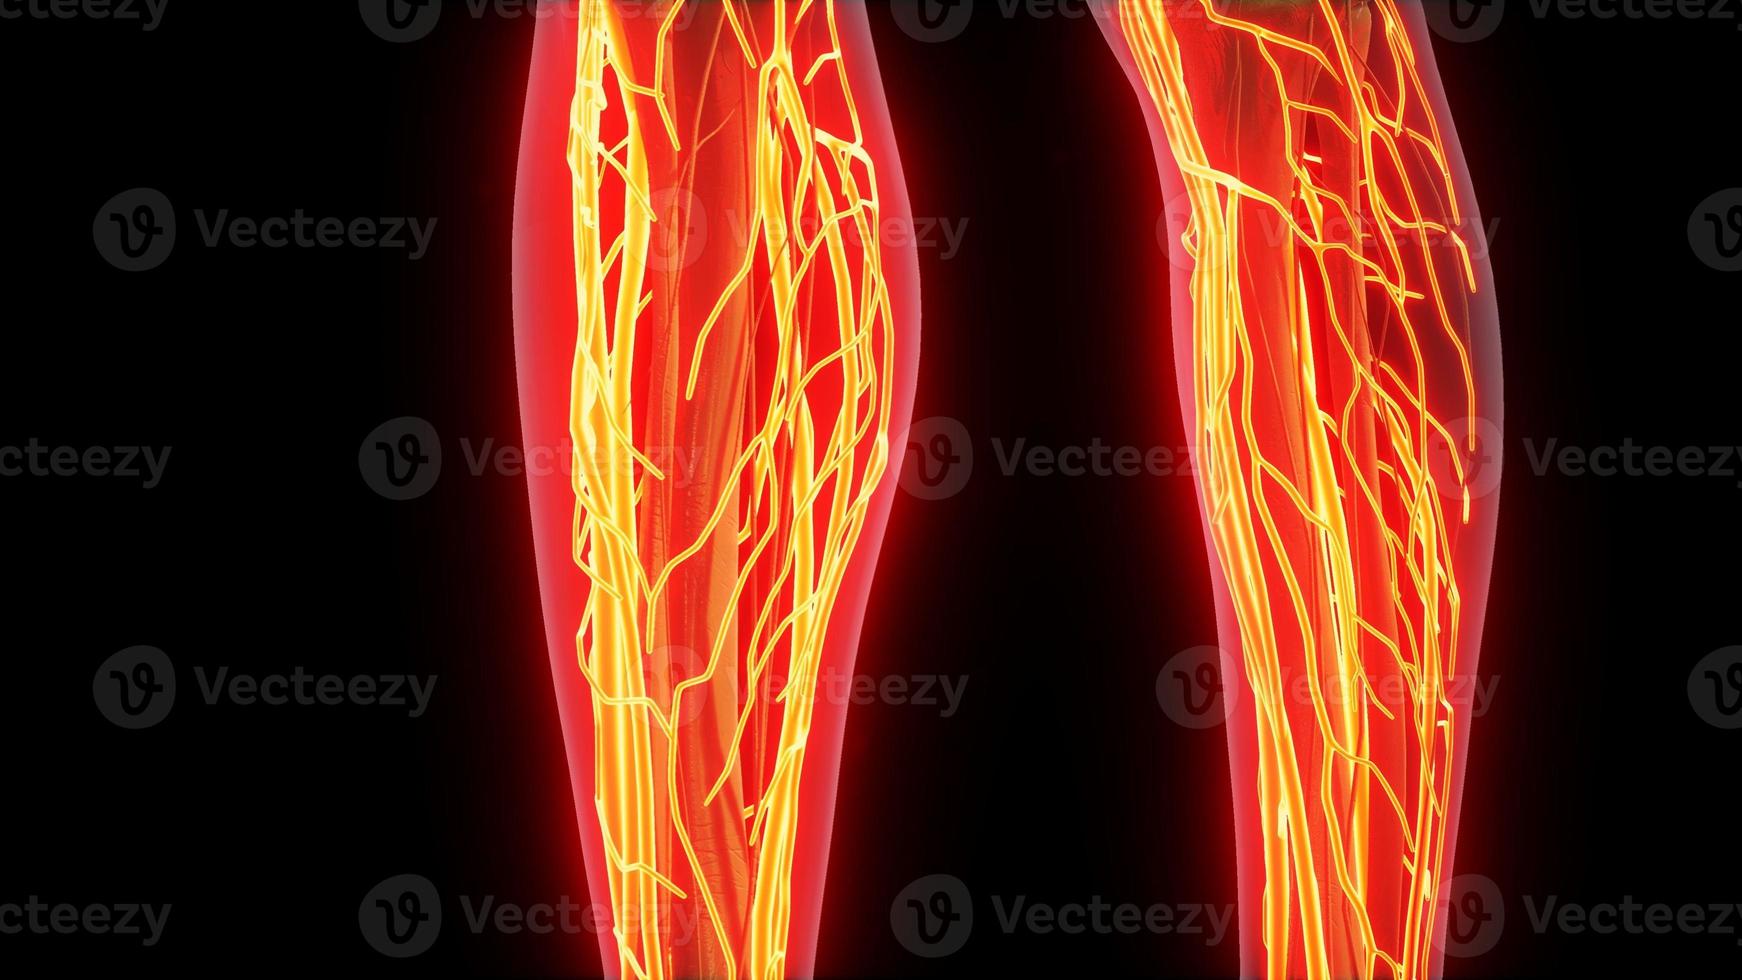 ciência anatomia dos vasos sanguíneos humanos foto